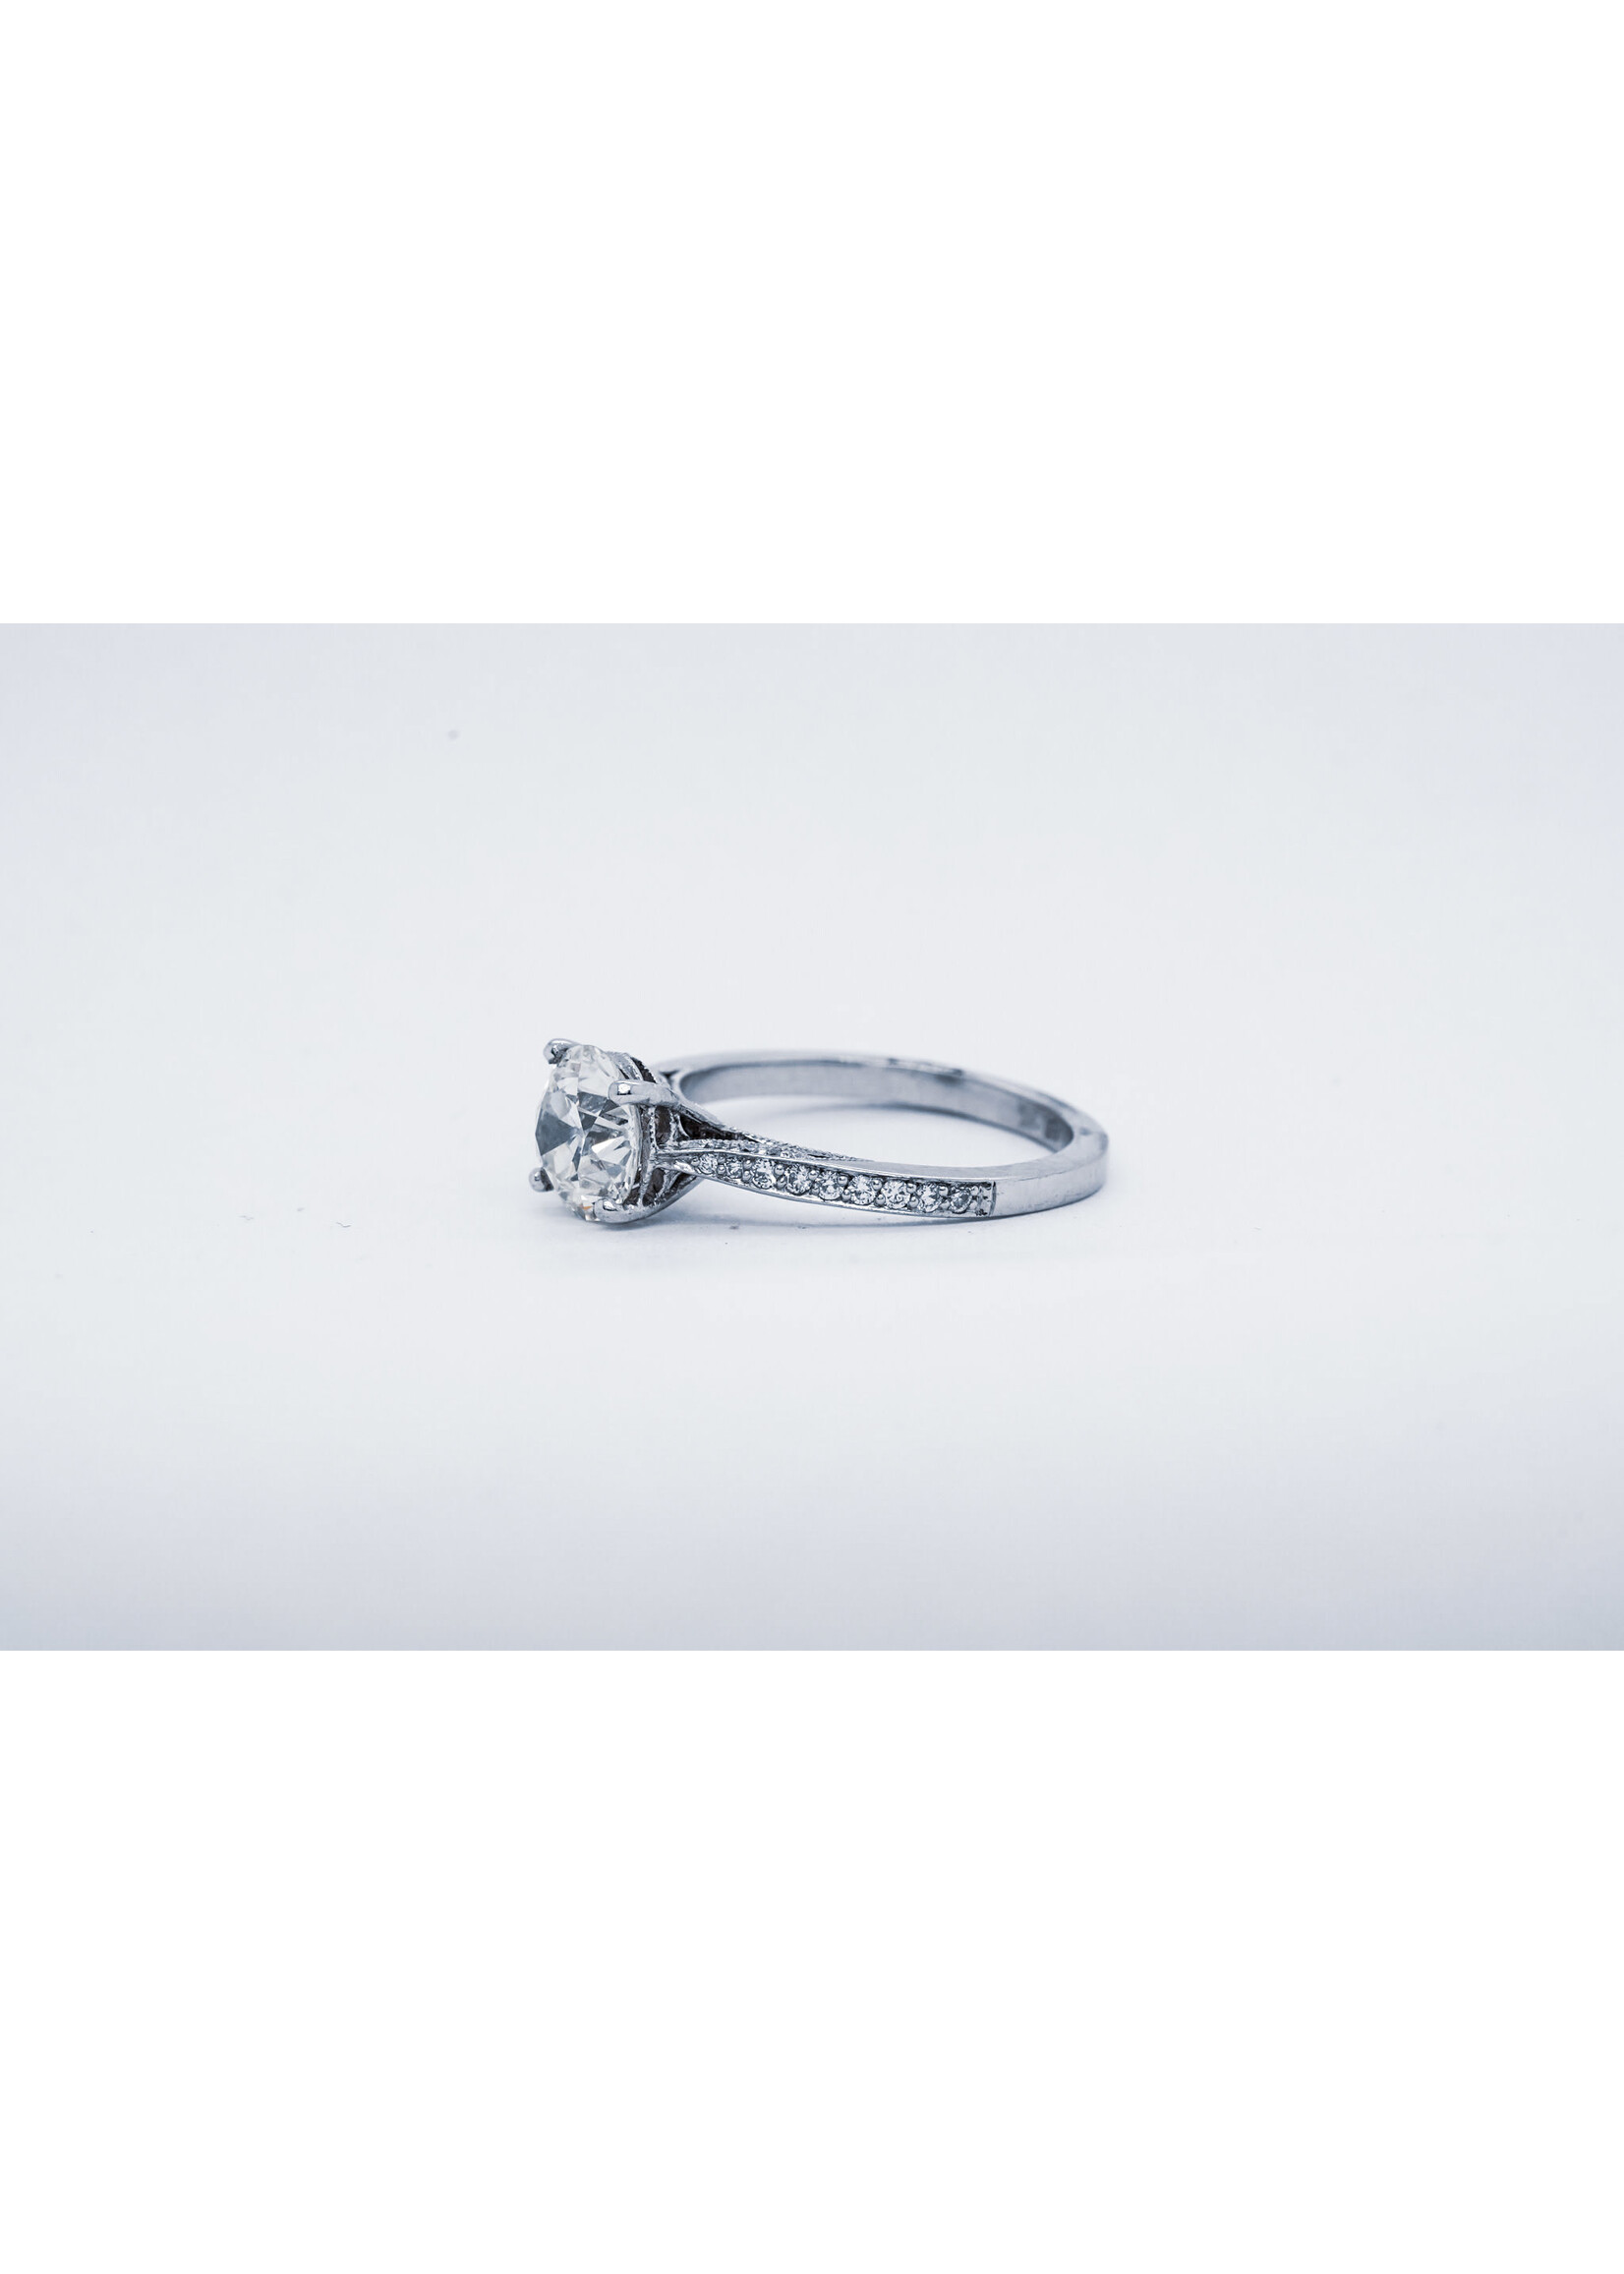 18KW 3.55g 1.78ctw (1.60ctr) I/VS2 Old European Tacori Diamond Engagement Ring (size 6.5)